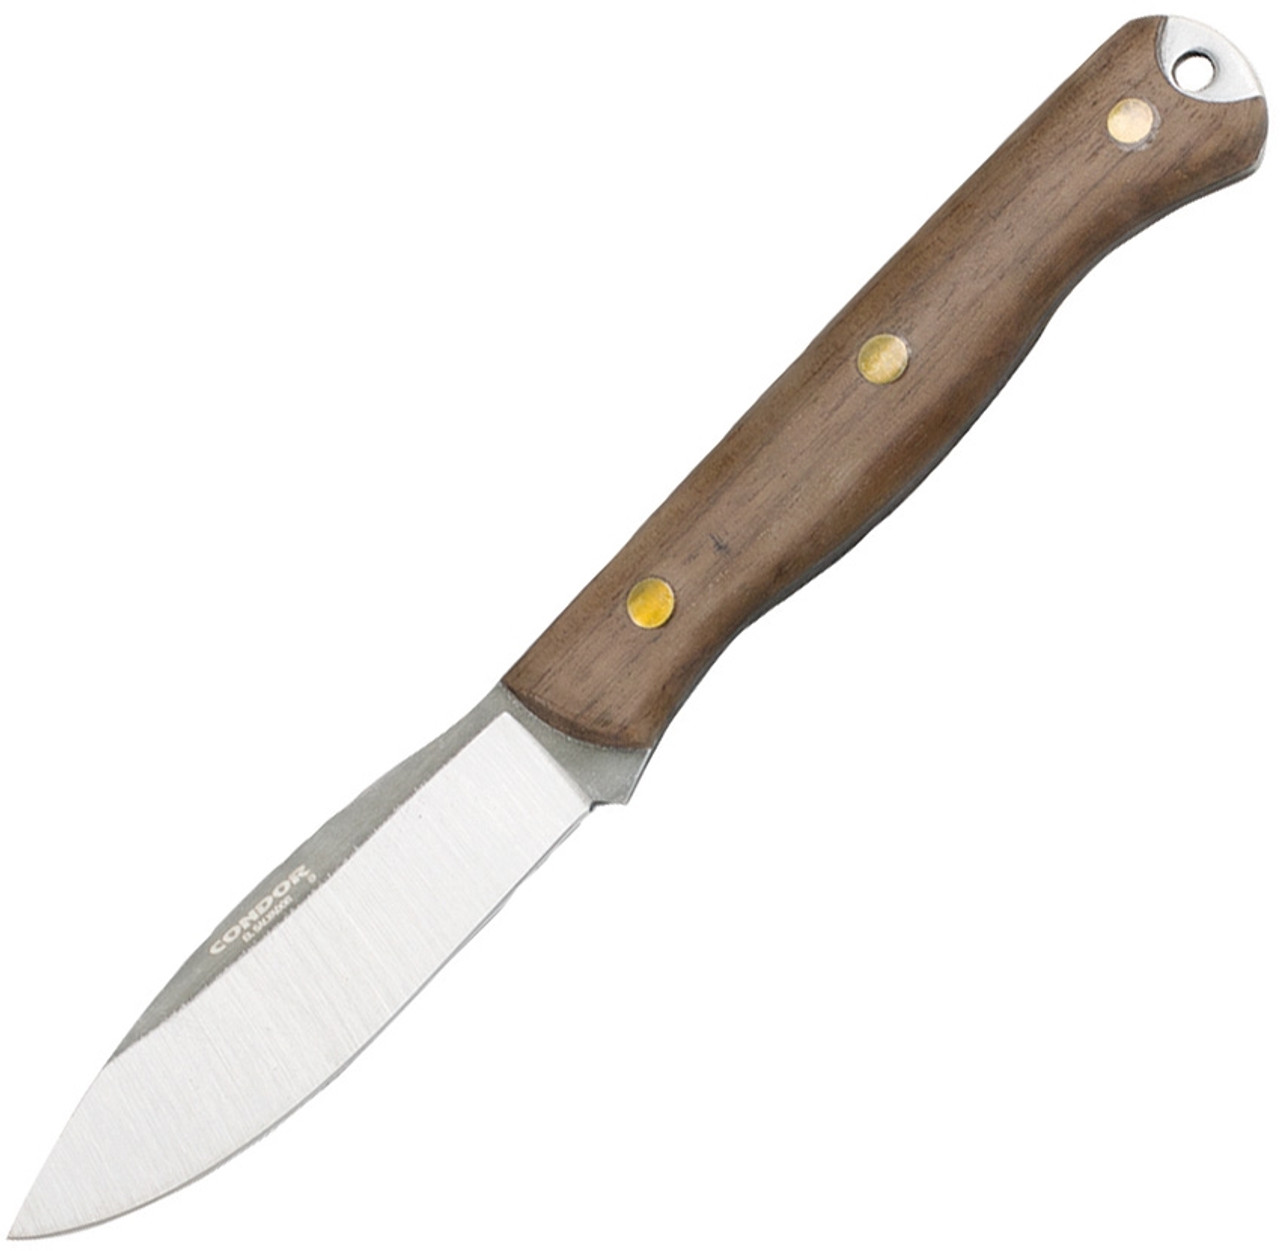 Condor Scotia Knife CTK102-3.55, 3.55 in. 1095 High Carbon Steel Blade, Walnut Handle